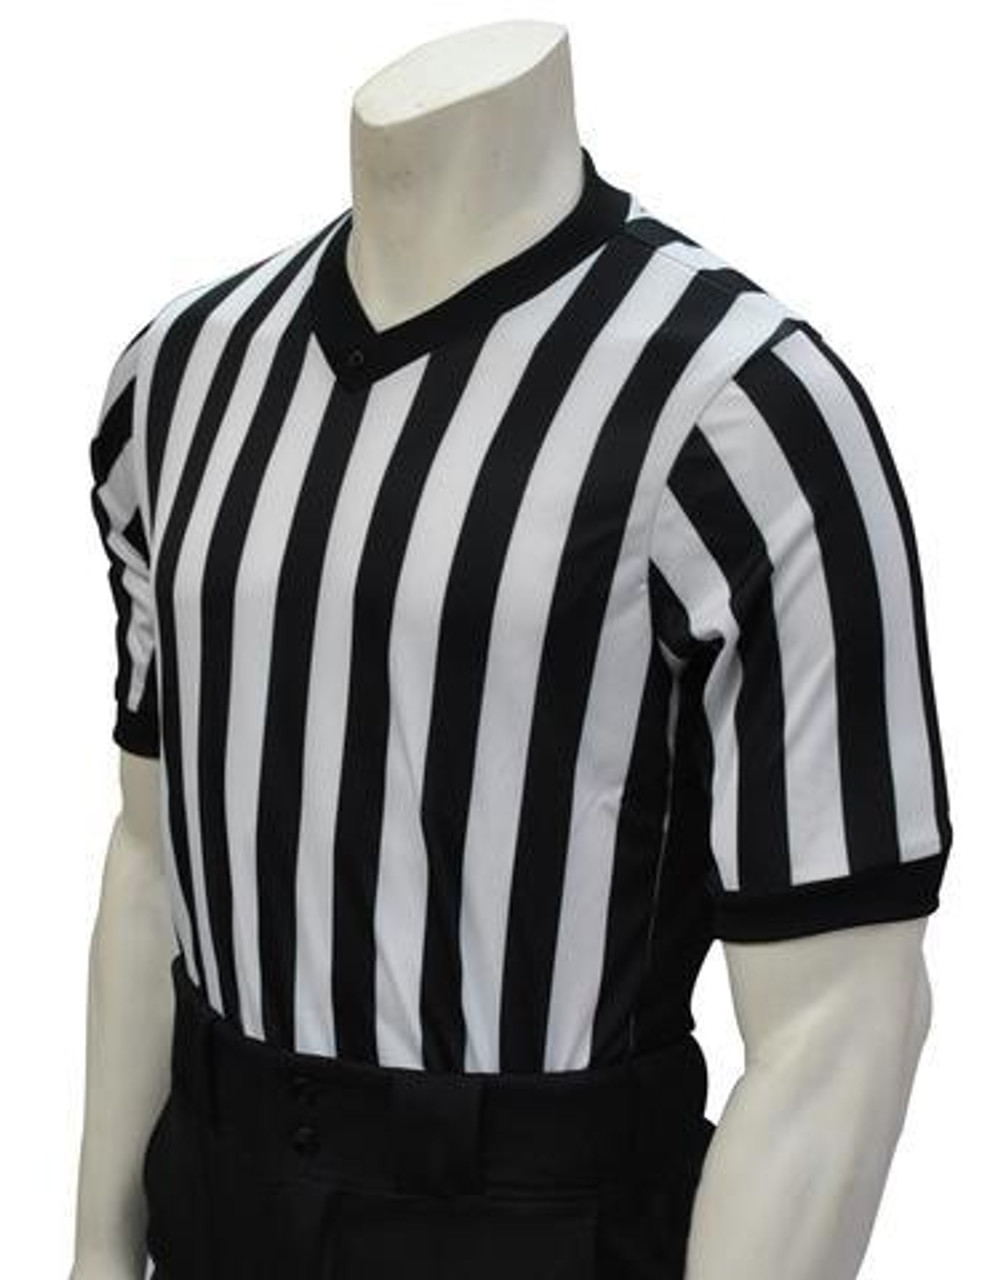 Smitty Ultra Mesh Side Panel Basketball Referee Shirt | Referee Equipment